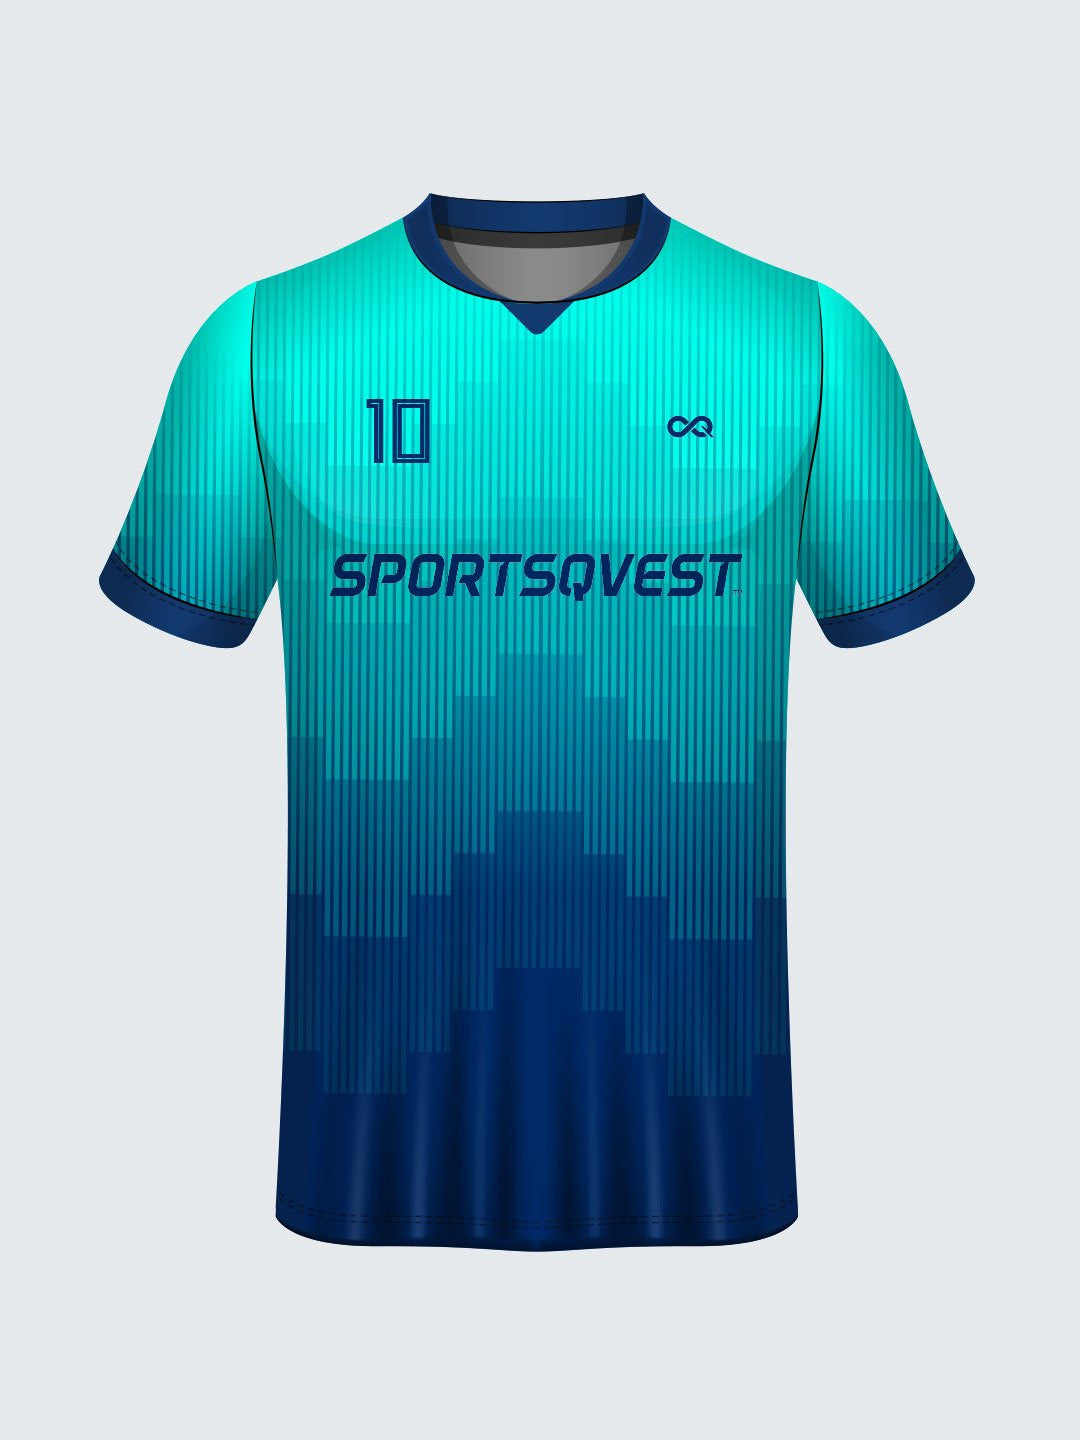 cricket new jersey design